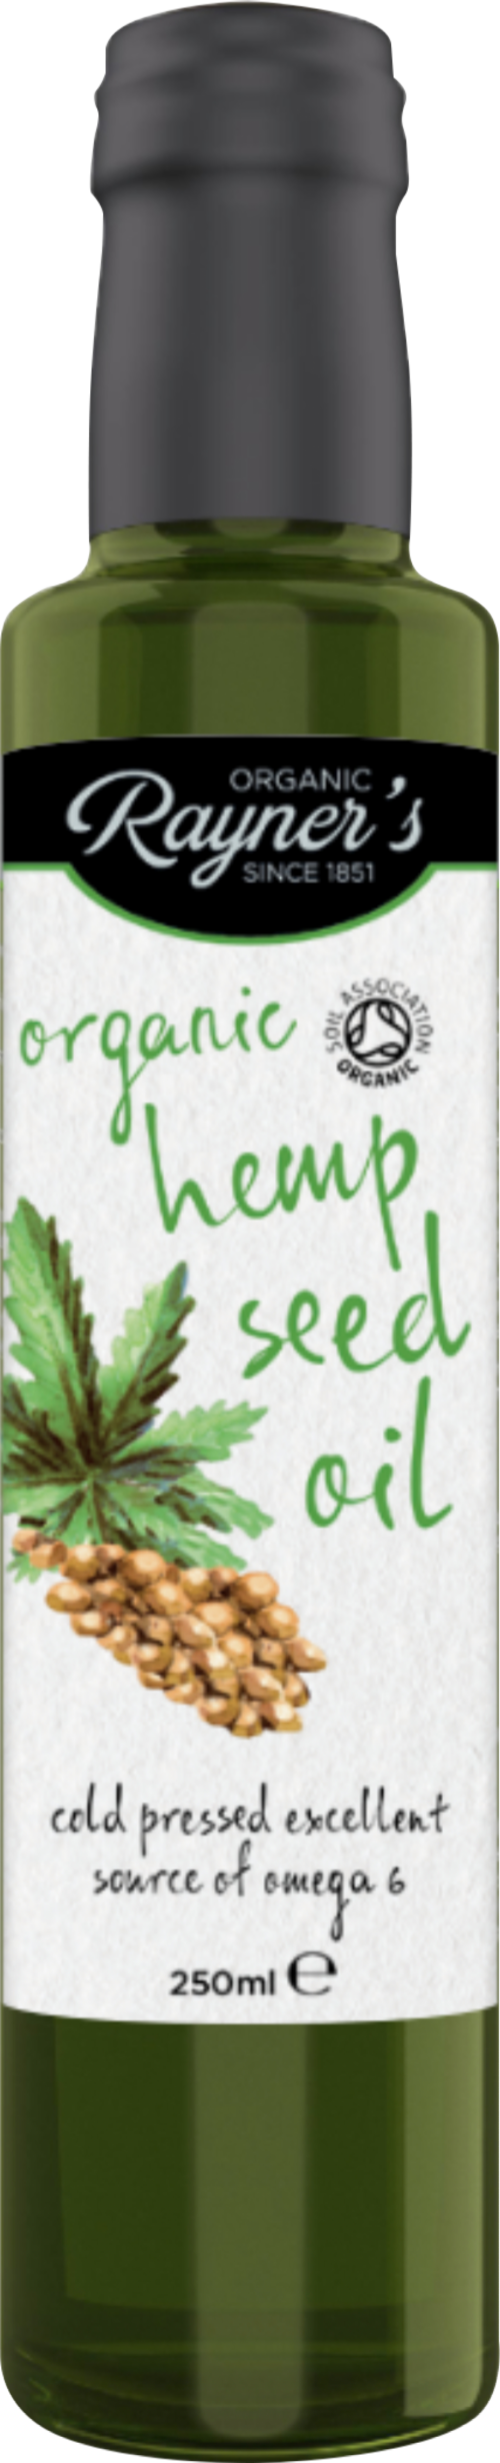 RAYNER'S Organic Hemp Seed Oil 250ml